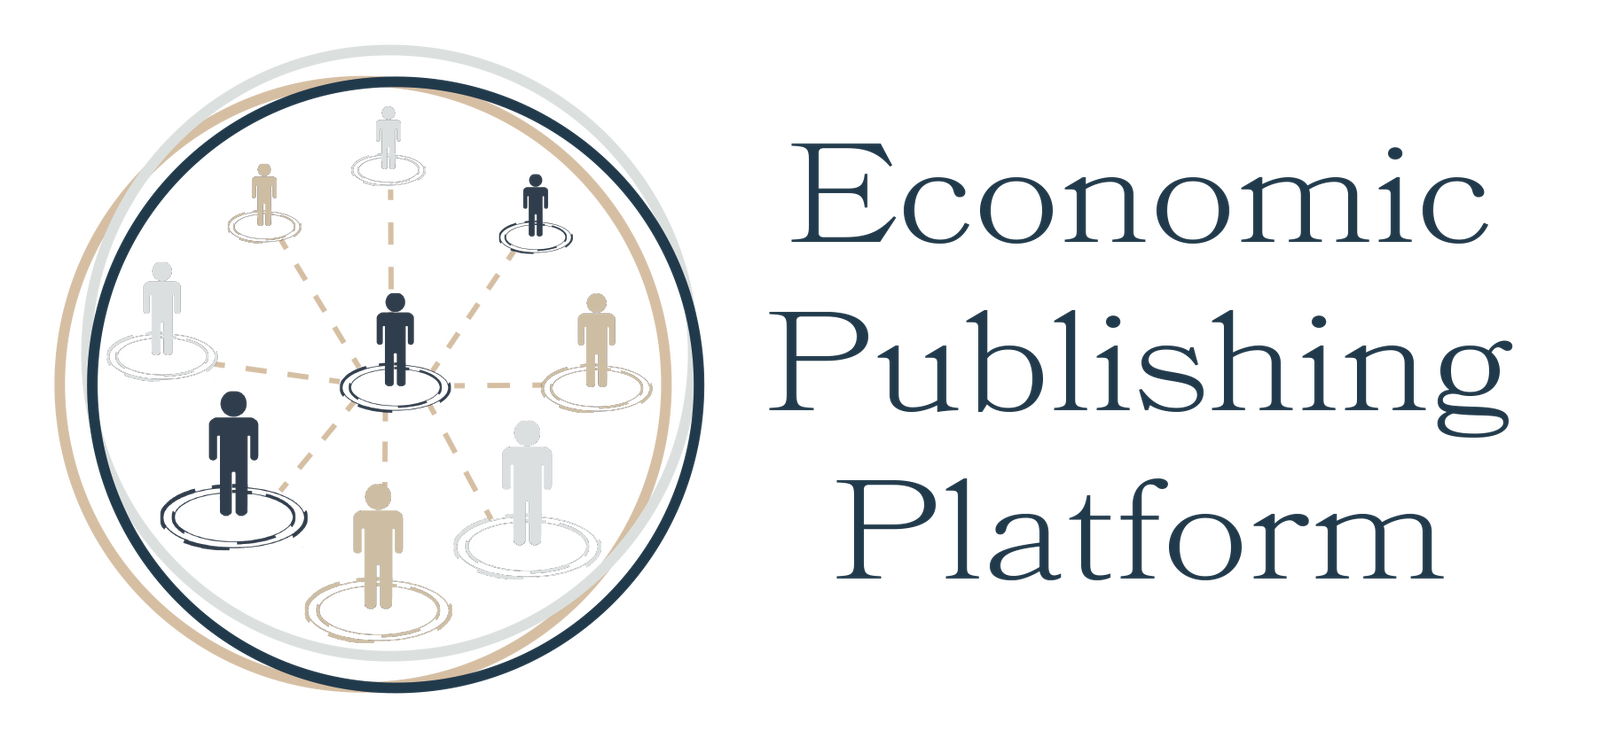 2_econoimc_publishing_platform-logo-2.png